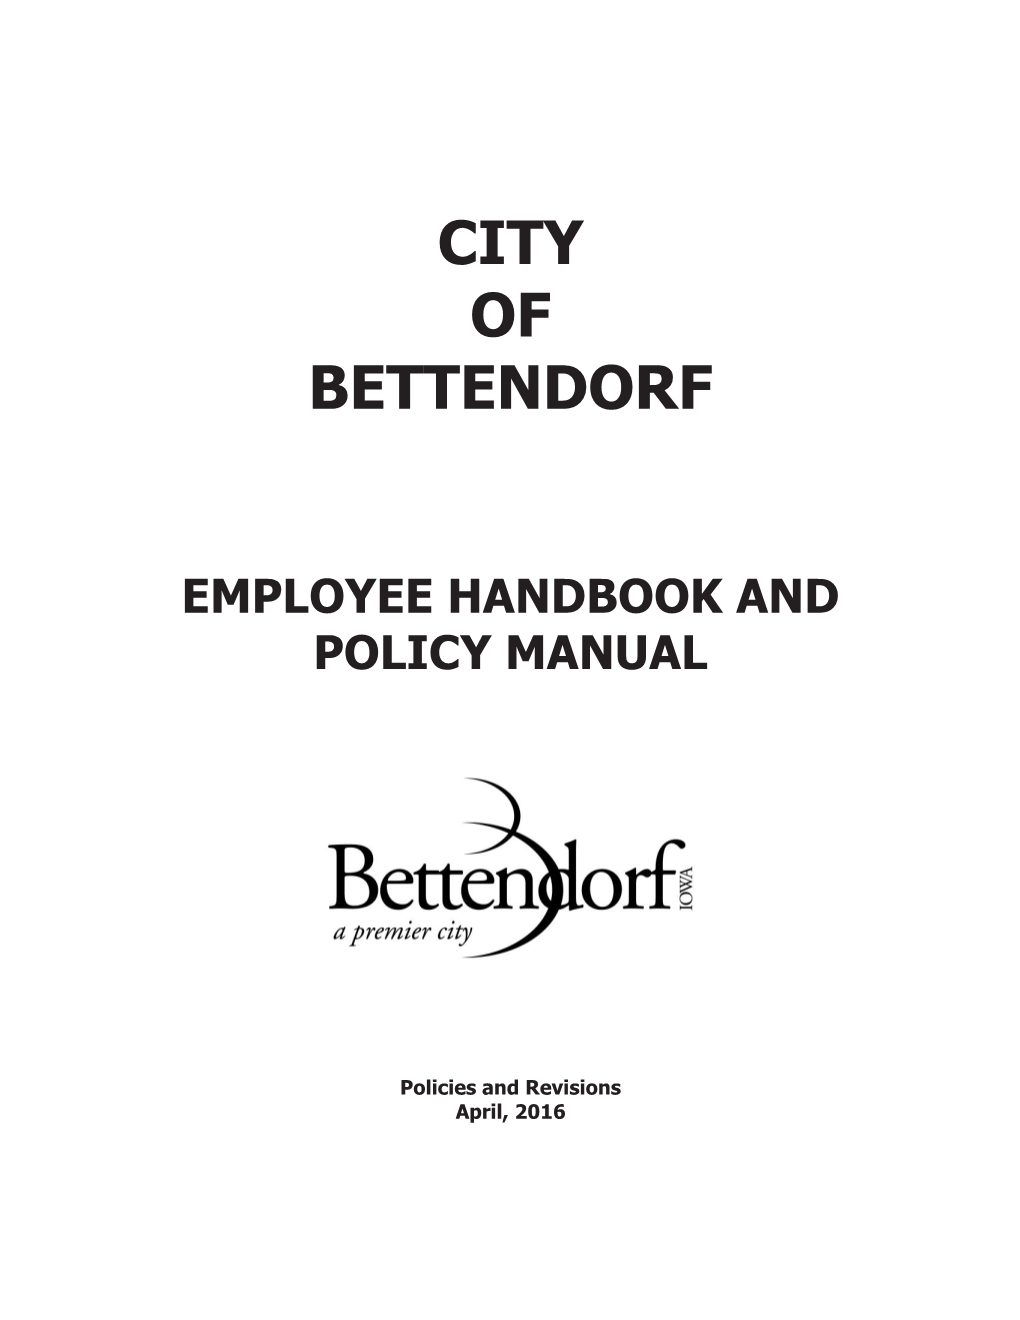 City of Bettendorf Employee Handbook and Policy